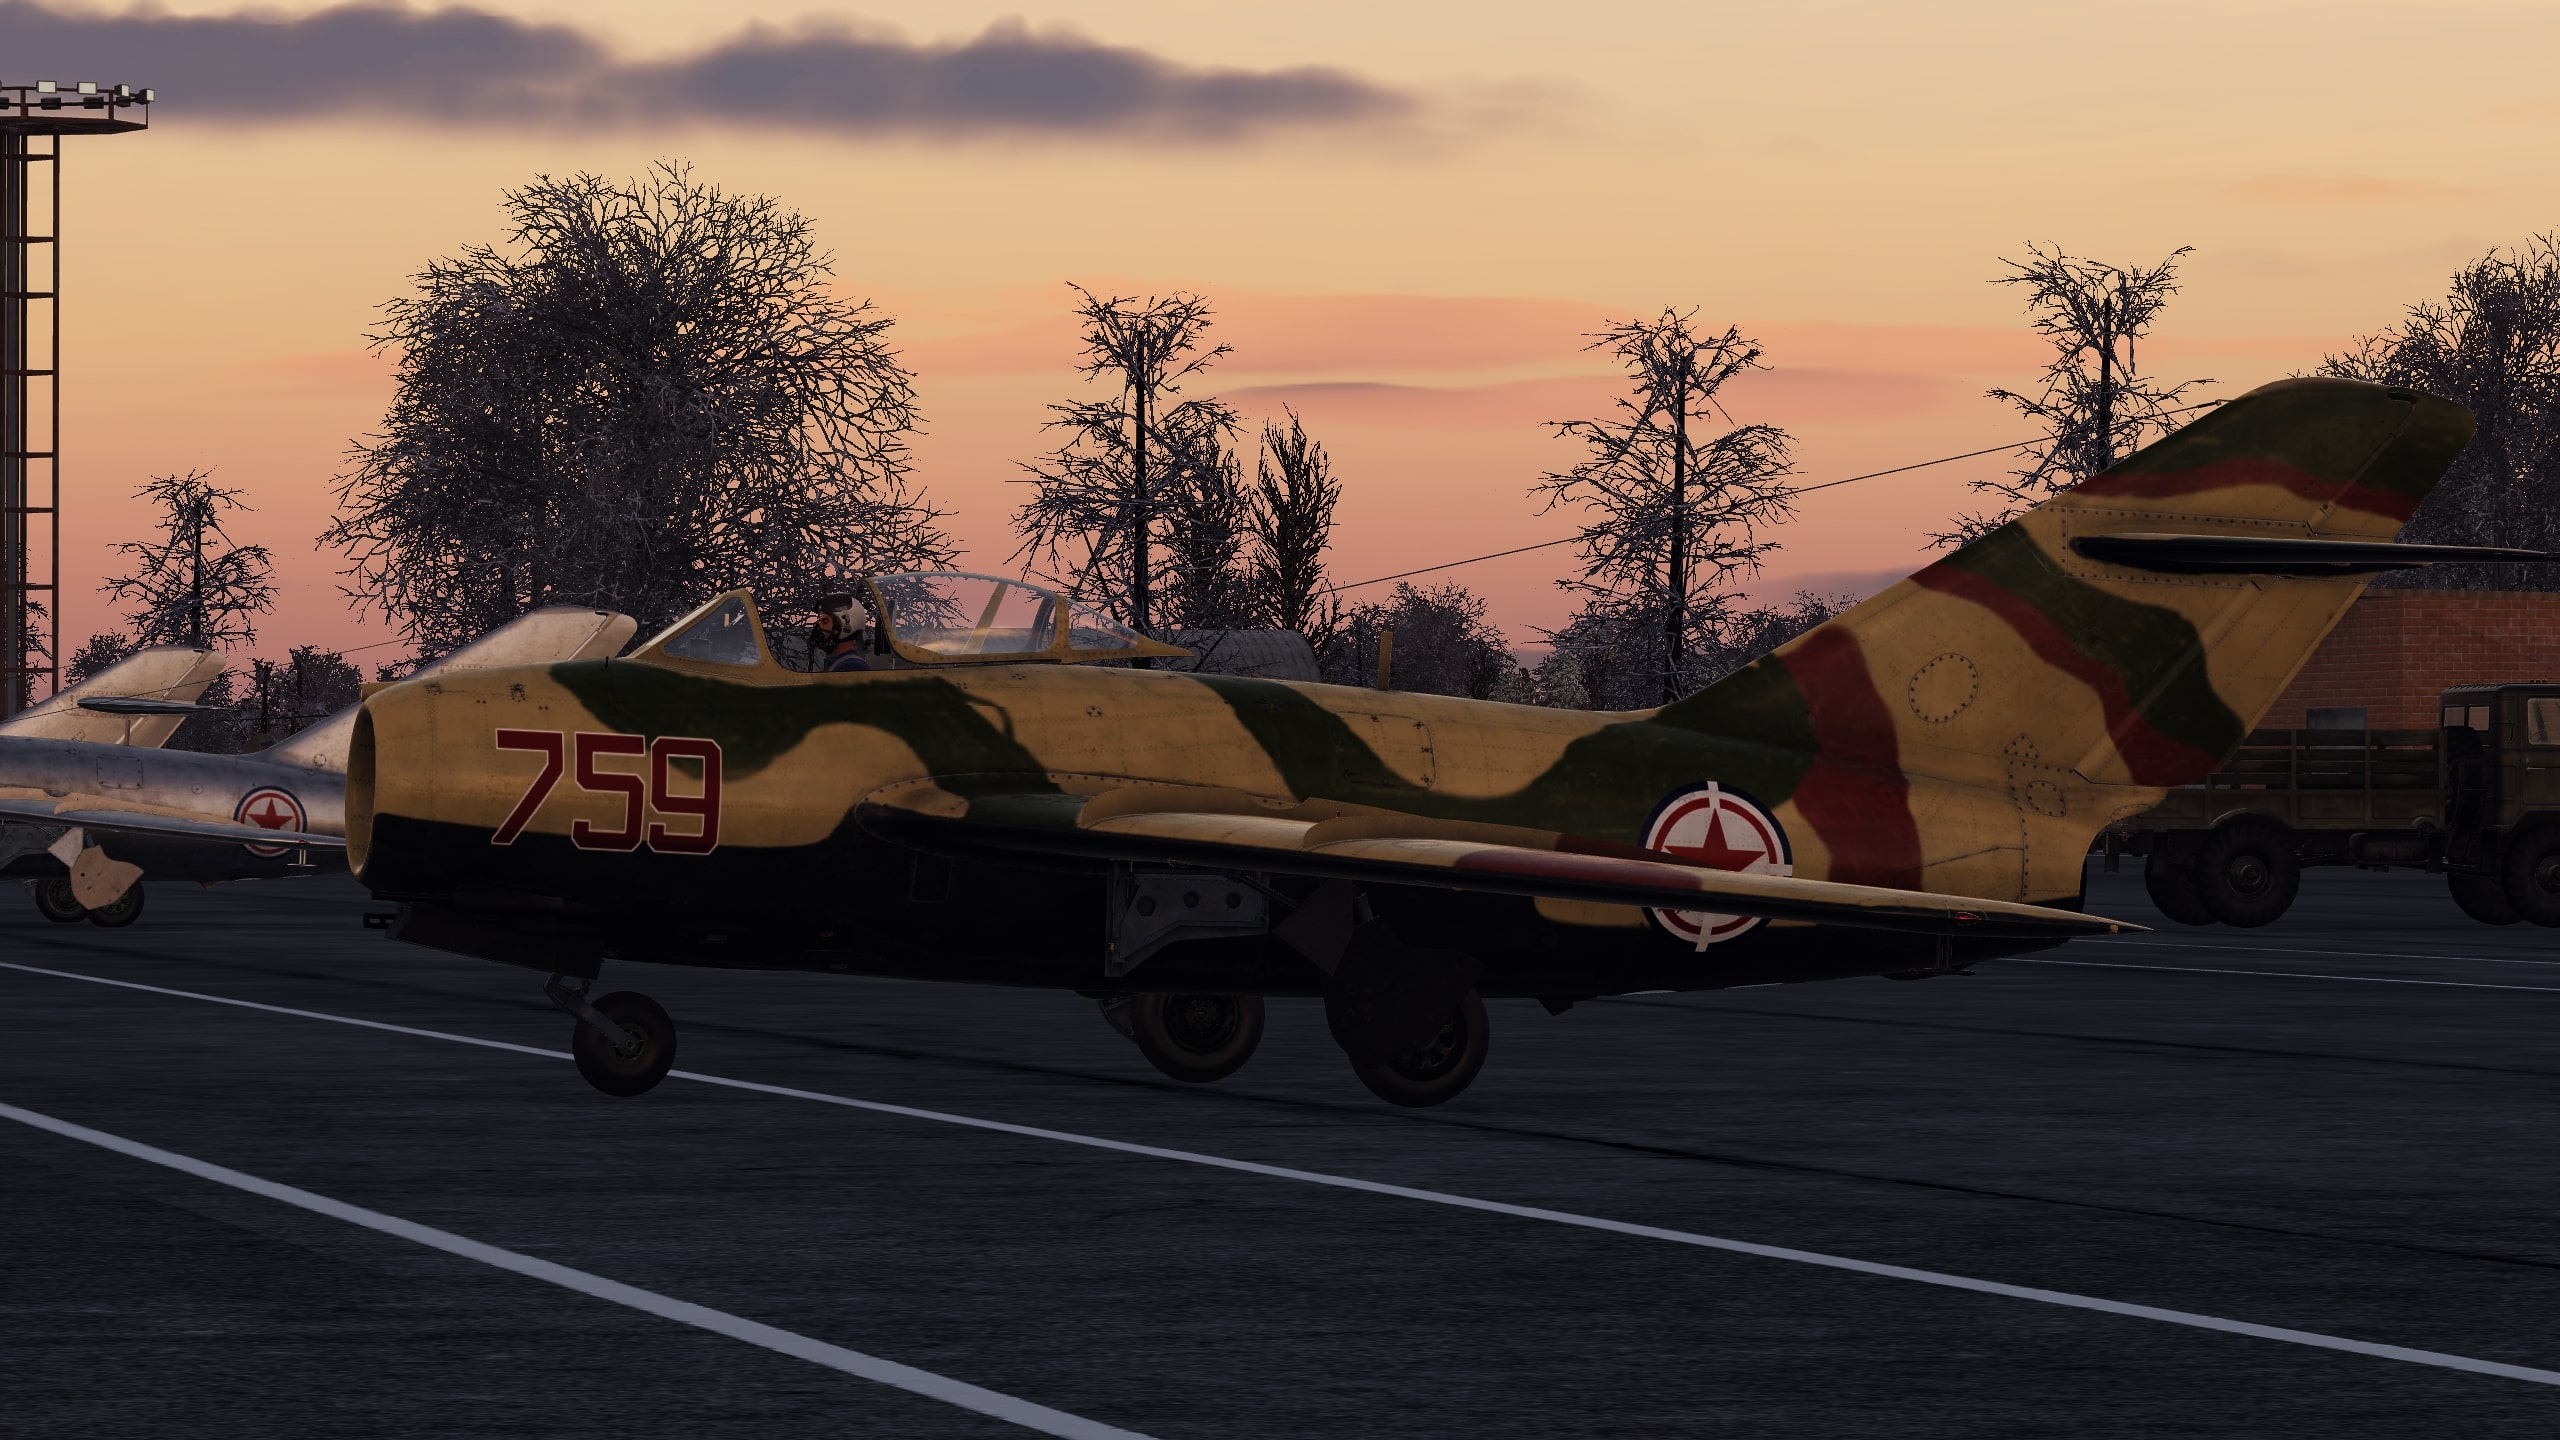 Lt. Khabiev's Red 759 Night Fighter